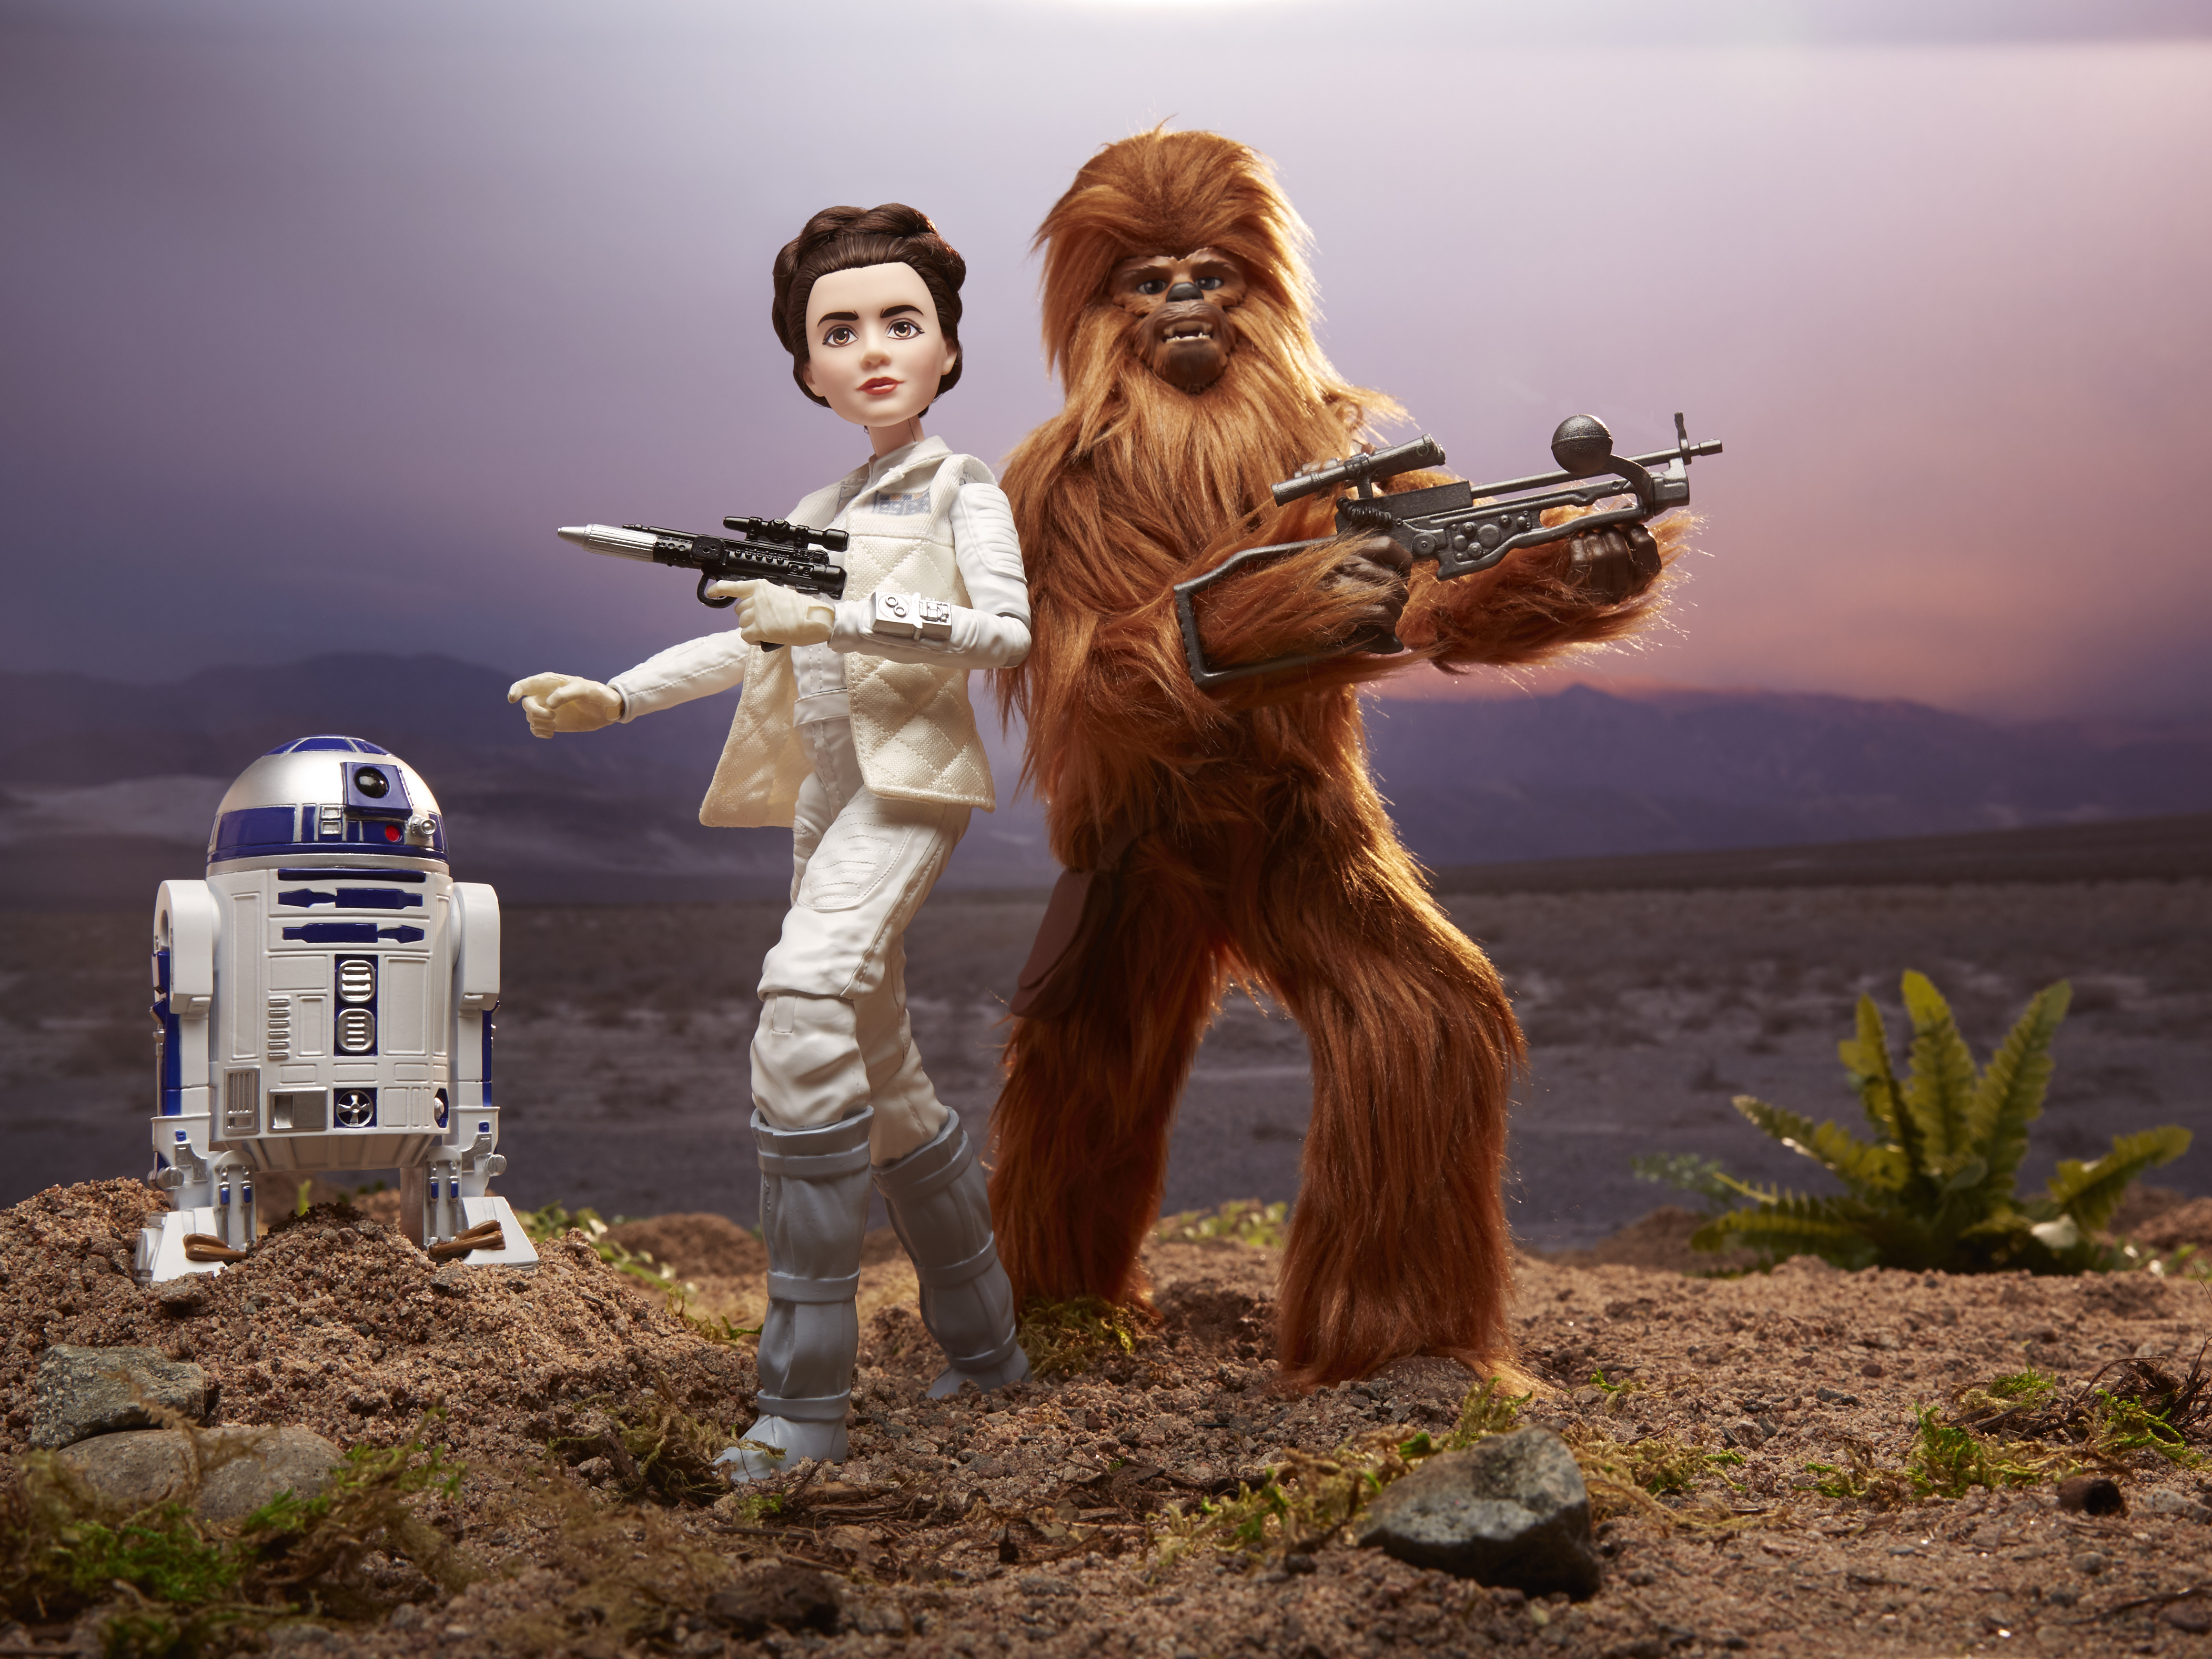 Star Wars Forces of Destiny 11-Inch Adventure Figure Assortment - Princess Leia, Chewbacca, R2-D2